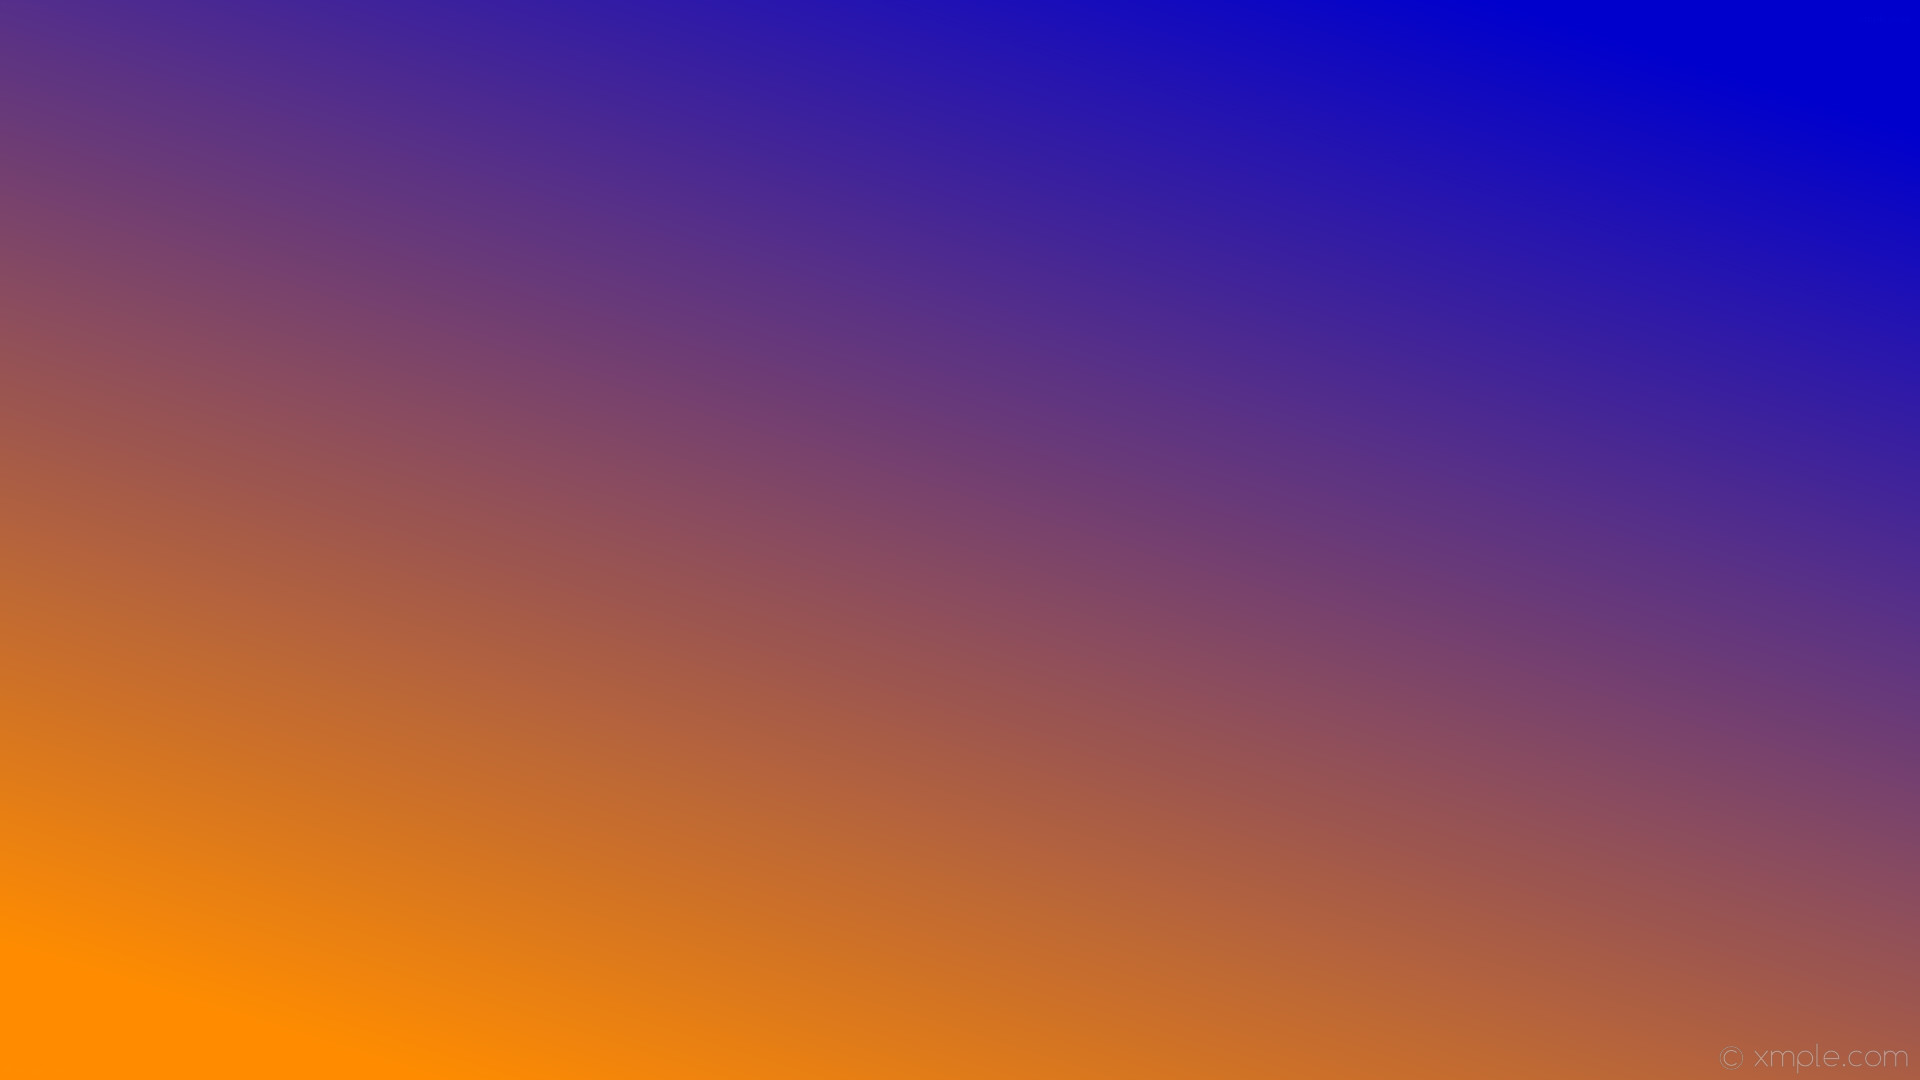 1920x1080 wallpaper orange blue gradient linear medium blue dark orange #0000cd  #ff8c00 45Â°